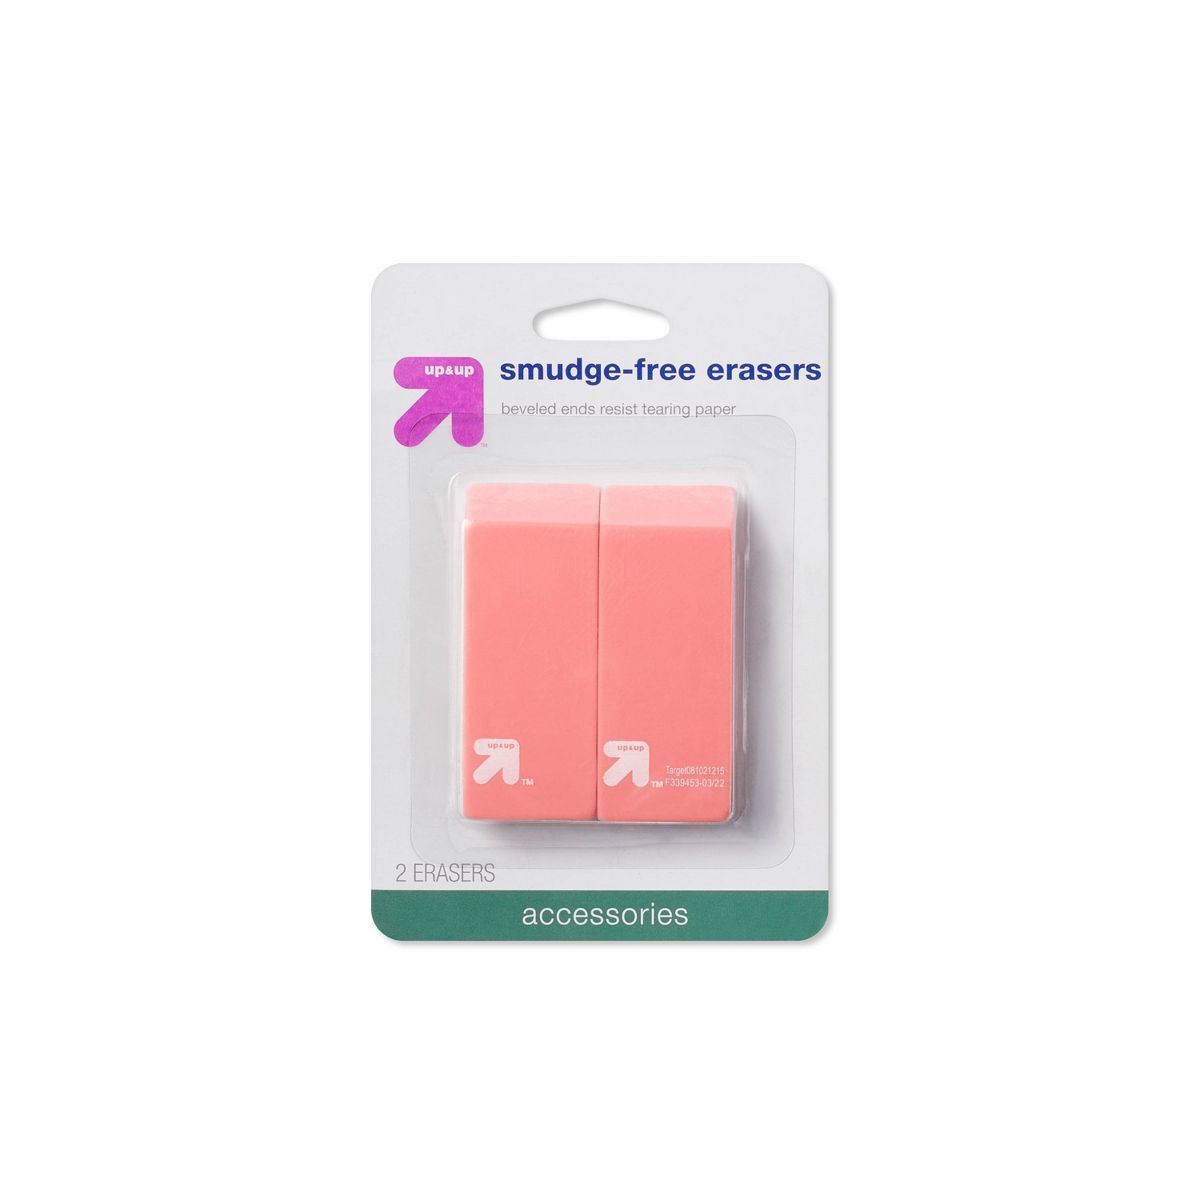 Smudge-Free Erasers - up & up™ | Target